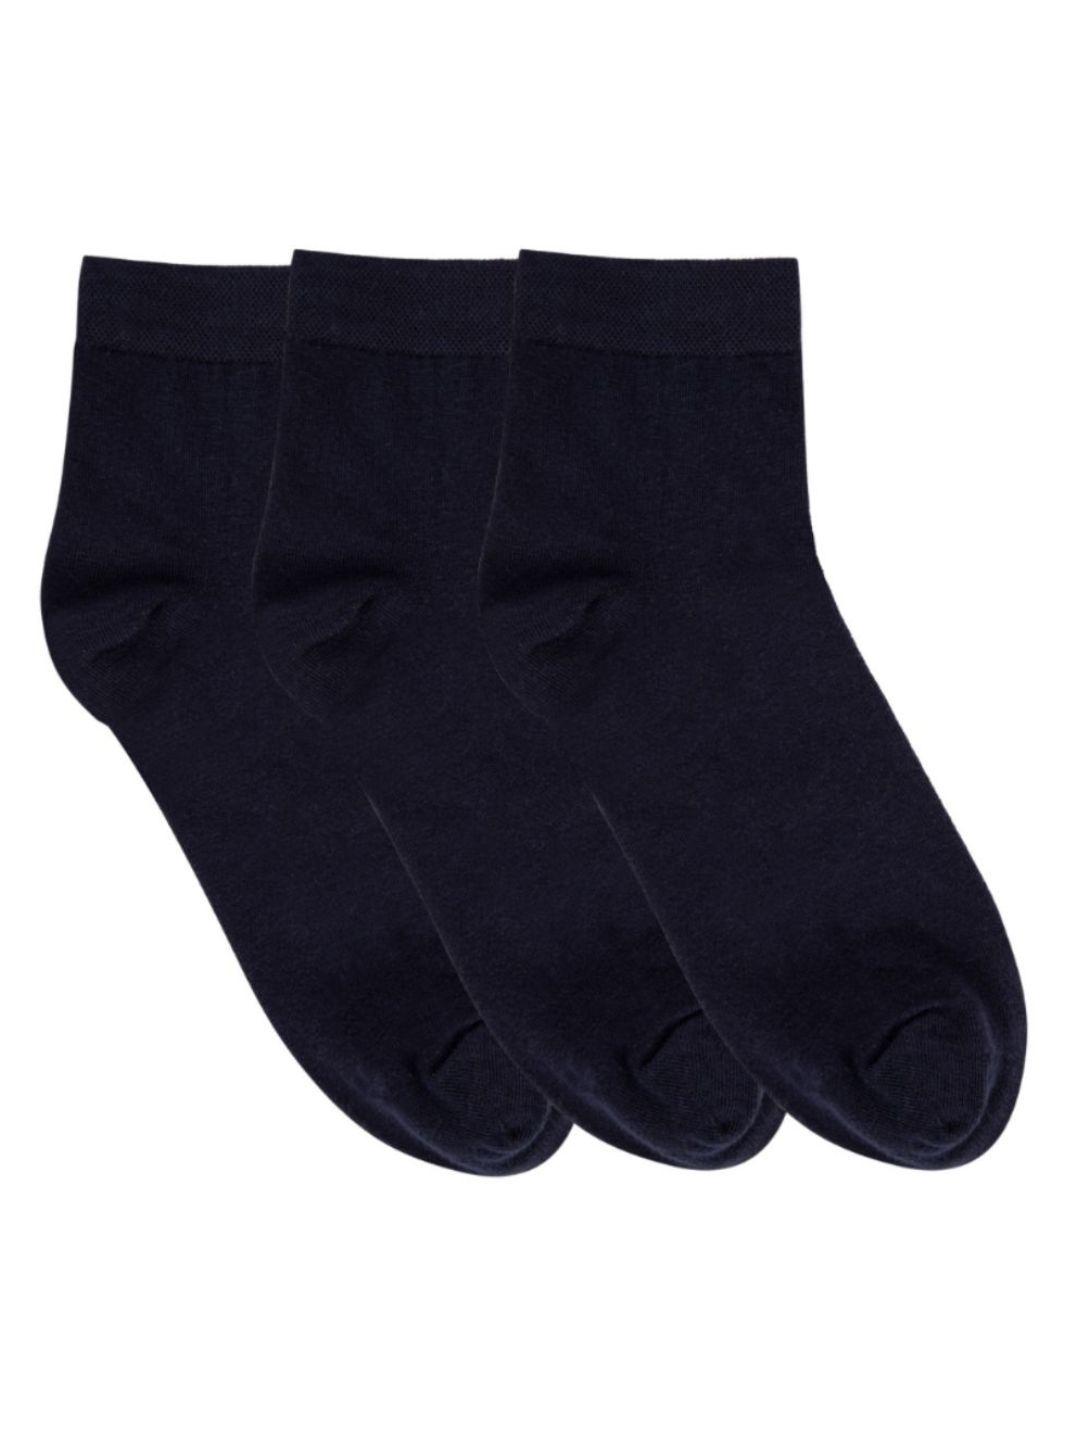 n2s next2skin men pack of 3 navy blue solid ankle-length cotton socks